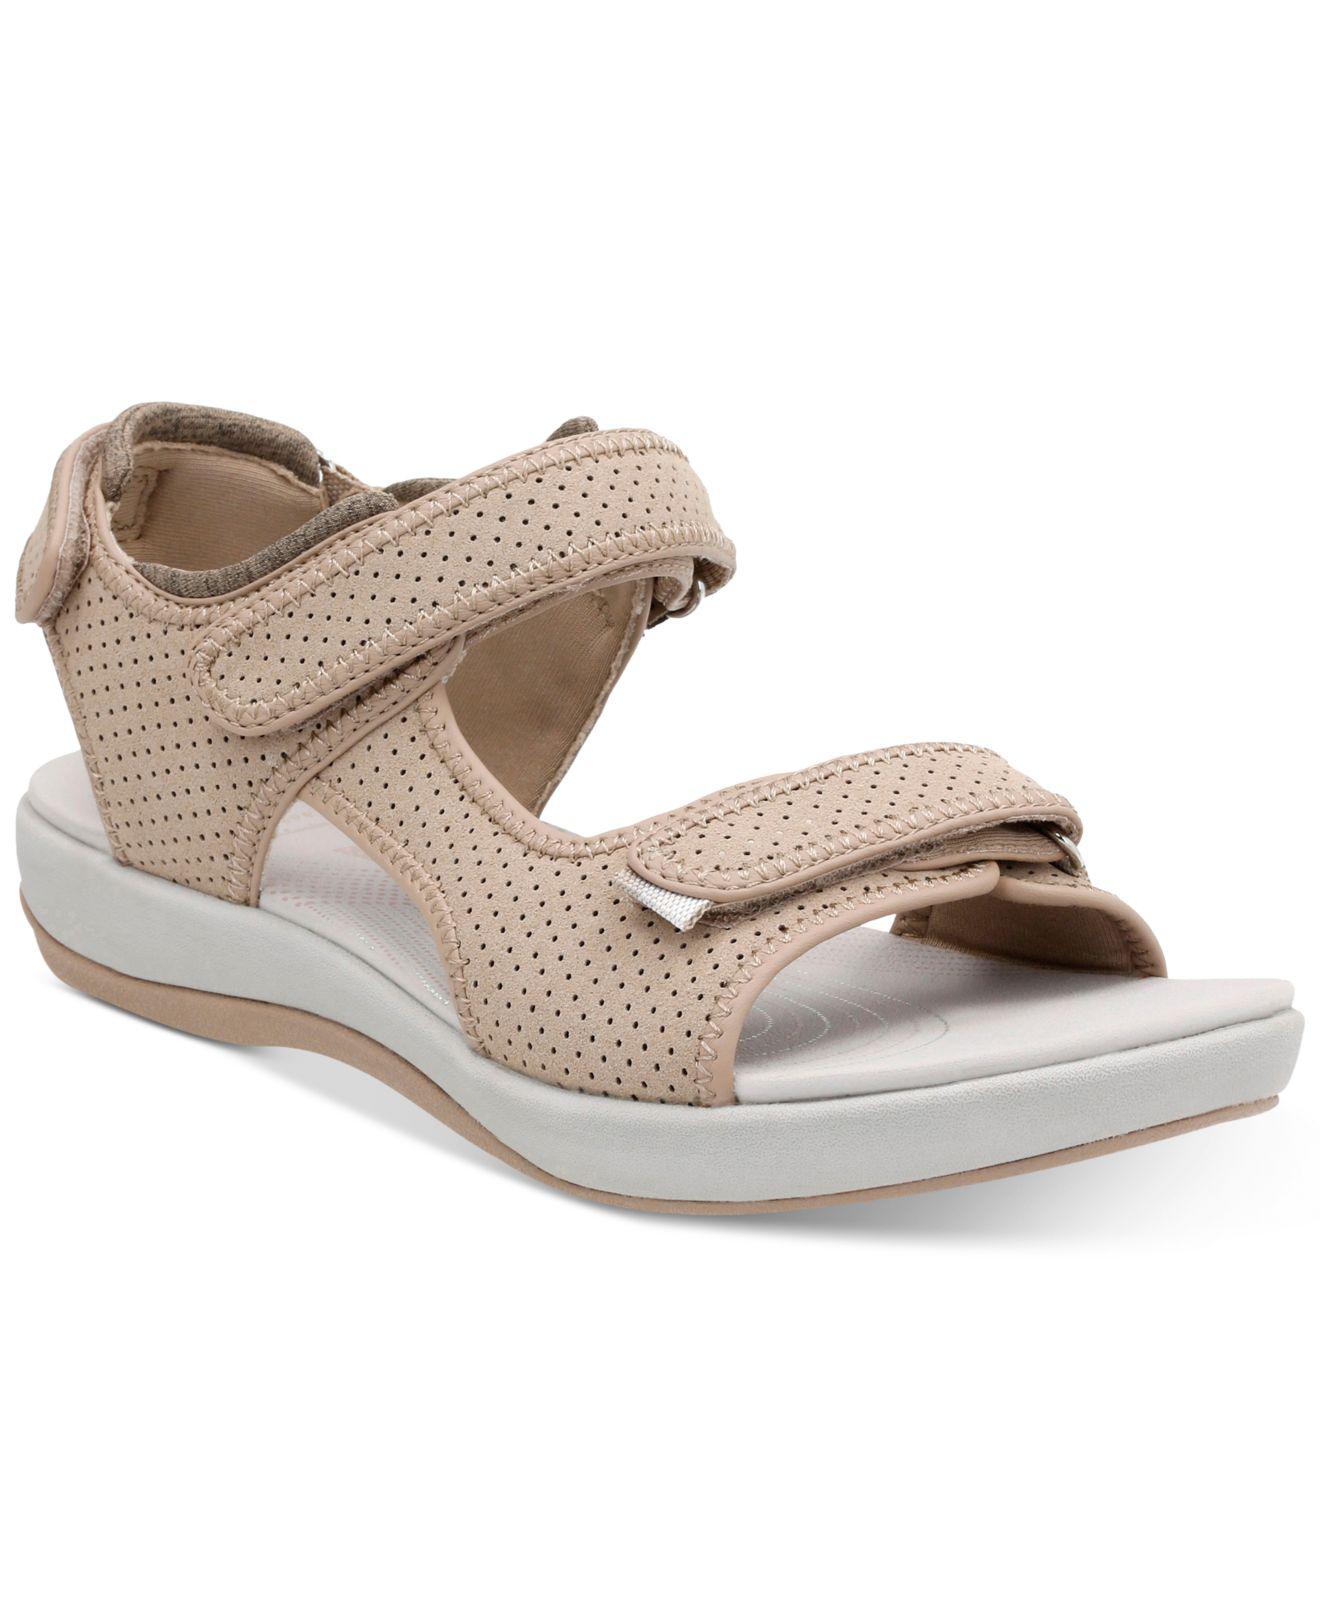 Clarks Women's Brizo Sammie Flat Sandals | Lyst